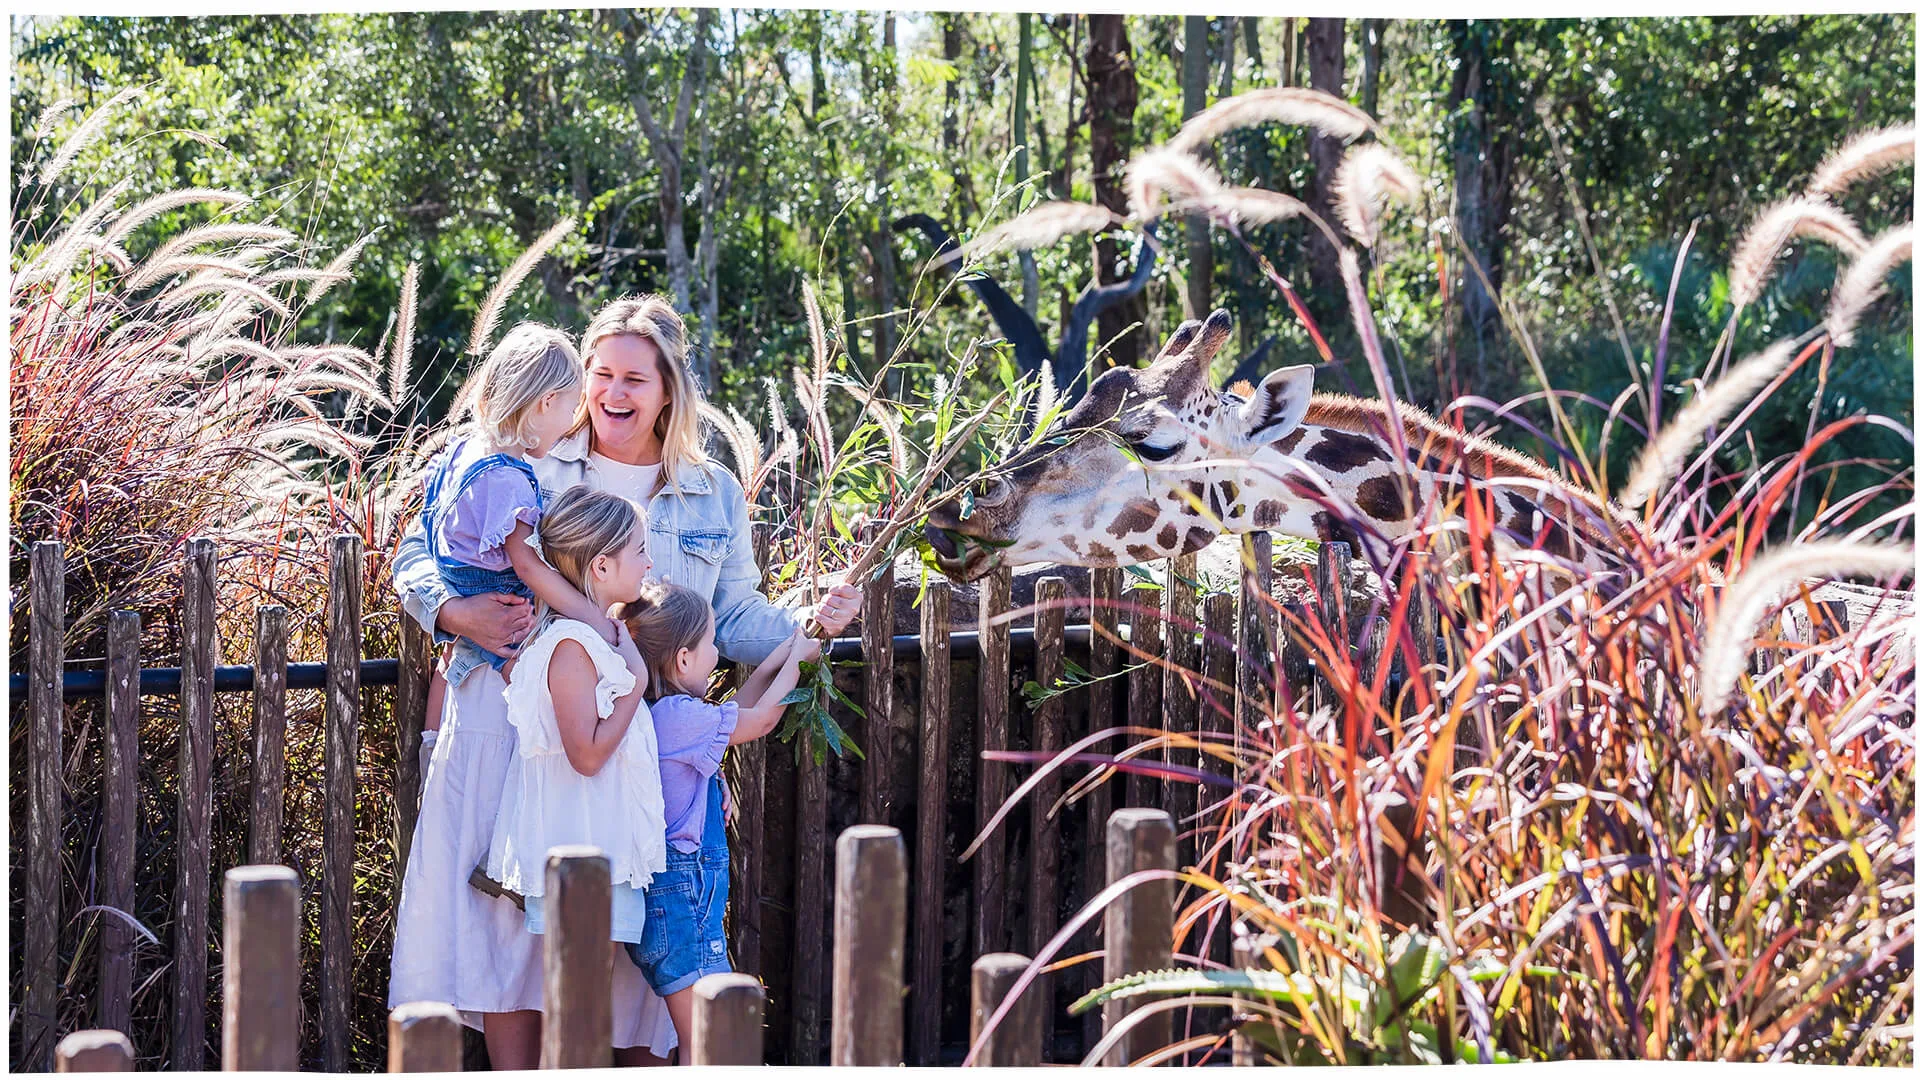 Australia Zoo giraffe feeding